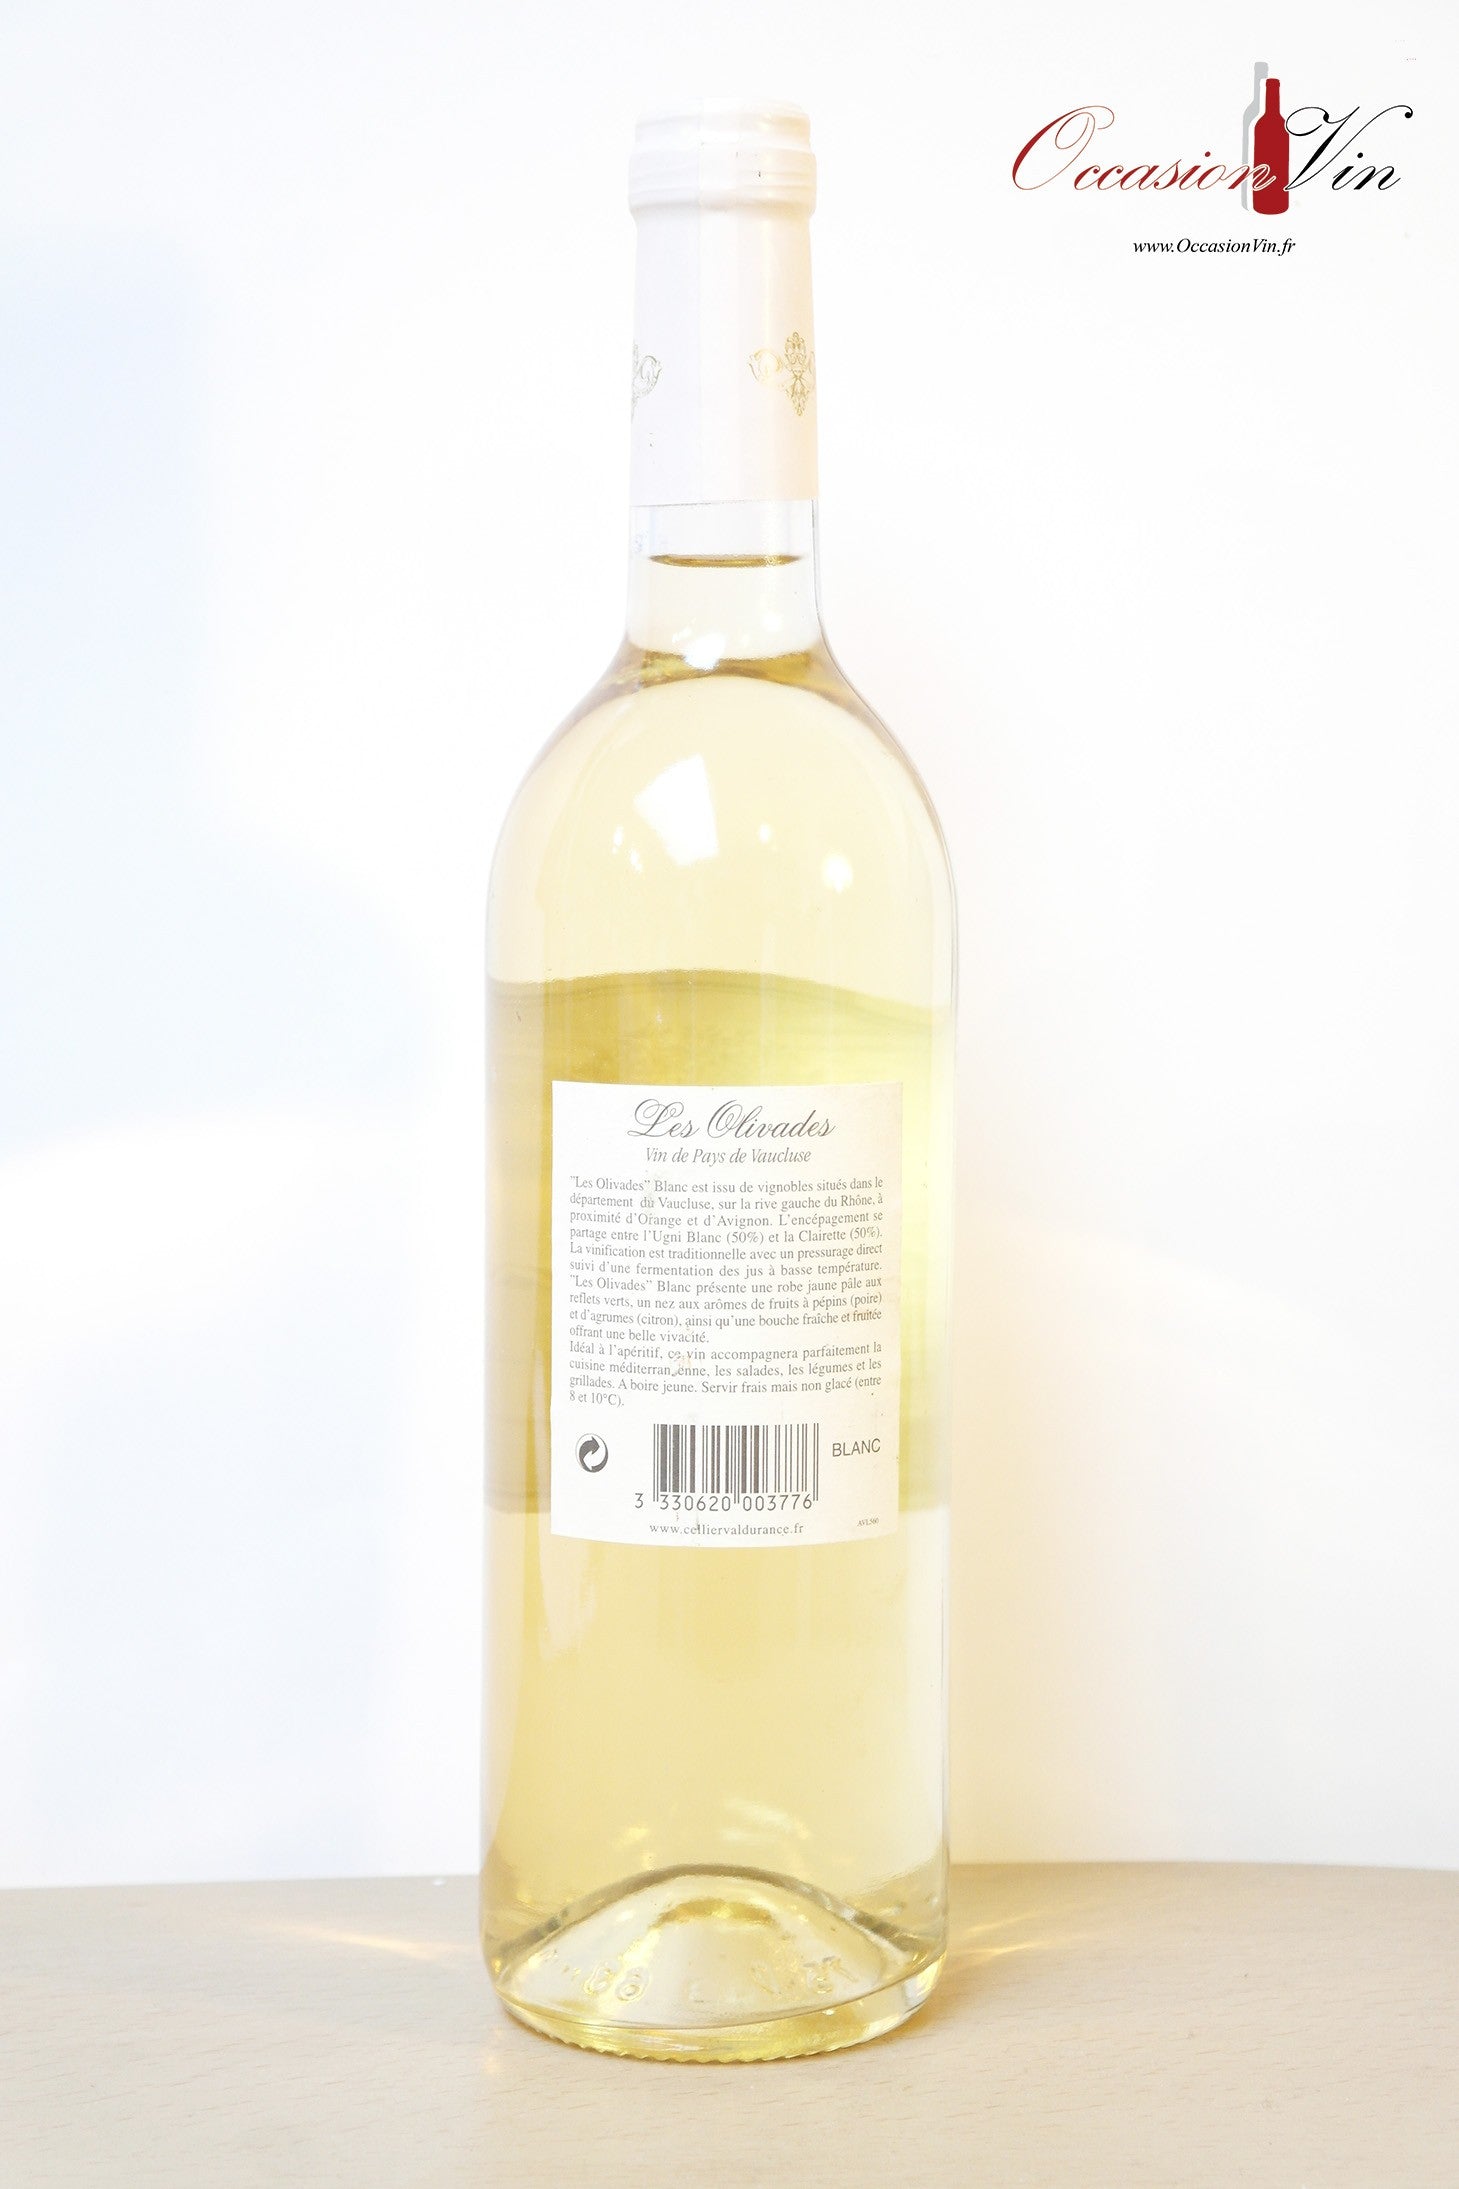 Les Olivades blanc Vin 2004